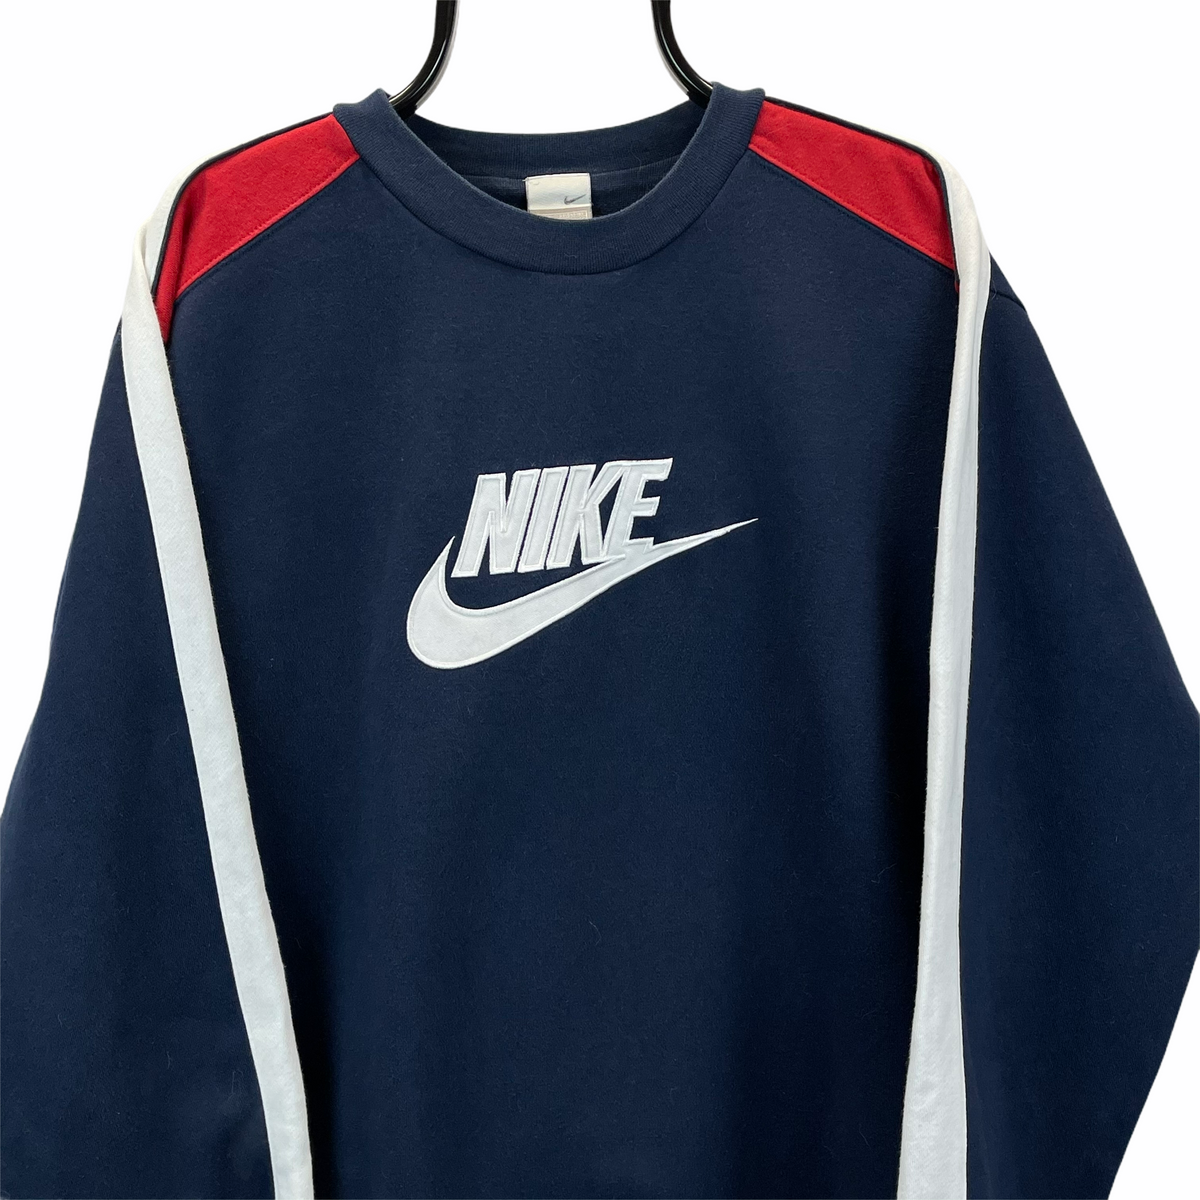 nike red white and blue sweatshirt